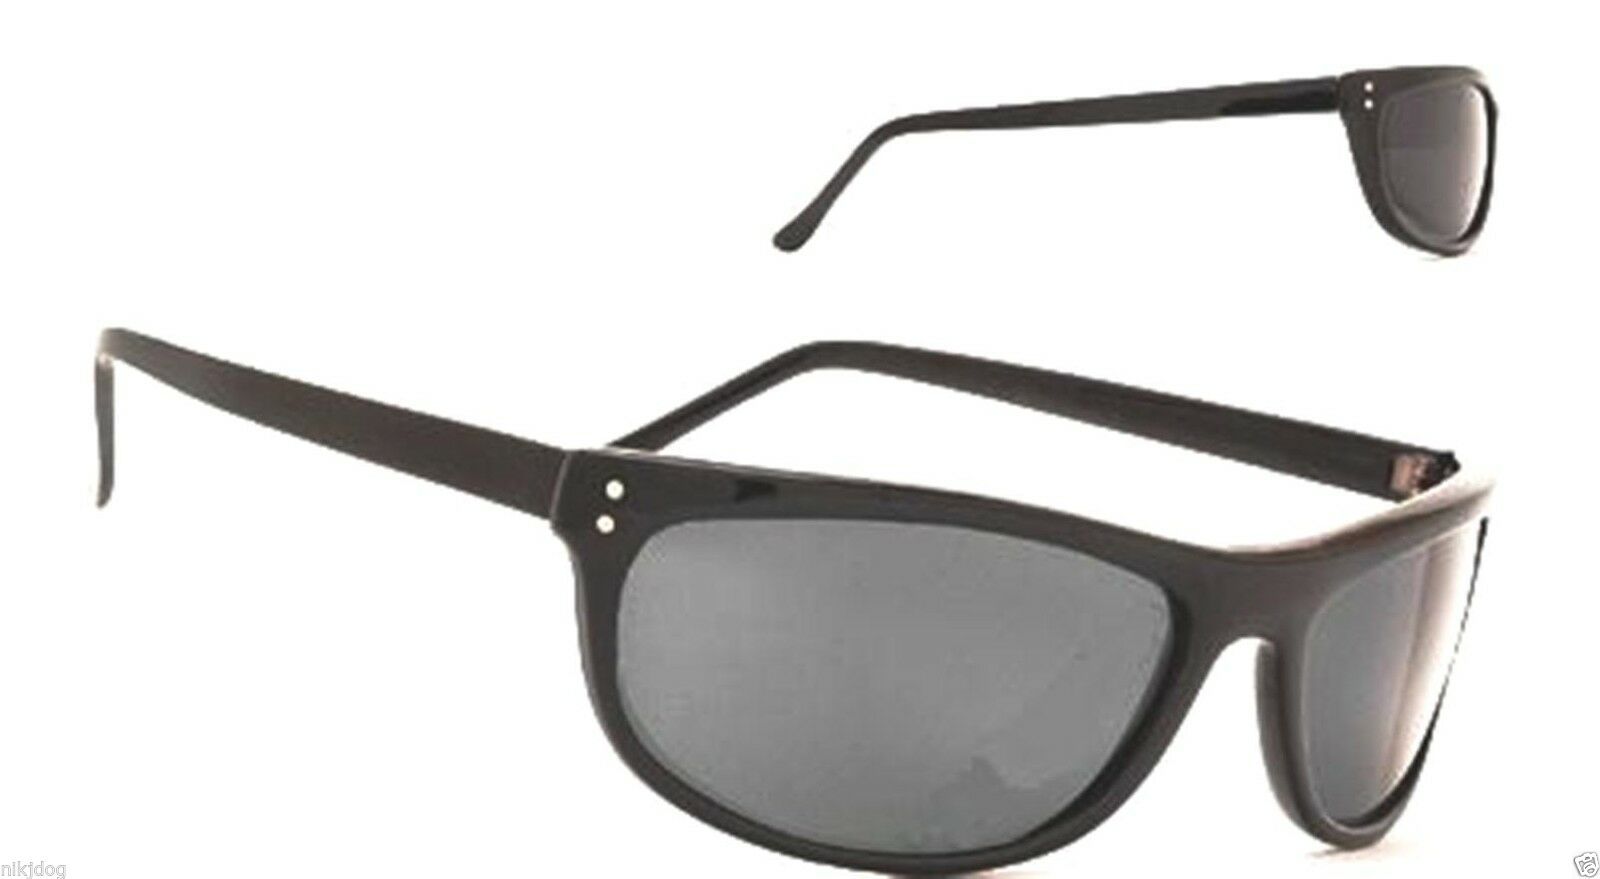 Unbranded - Black wrap sunglasses gray lenses 100% uv 400 protection